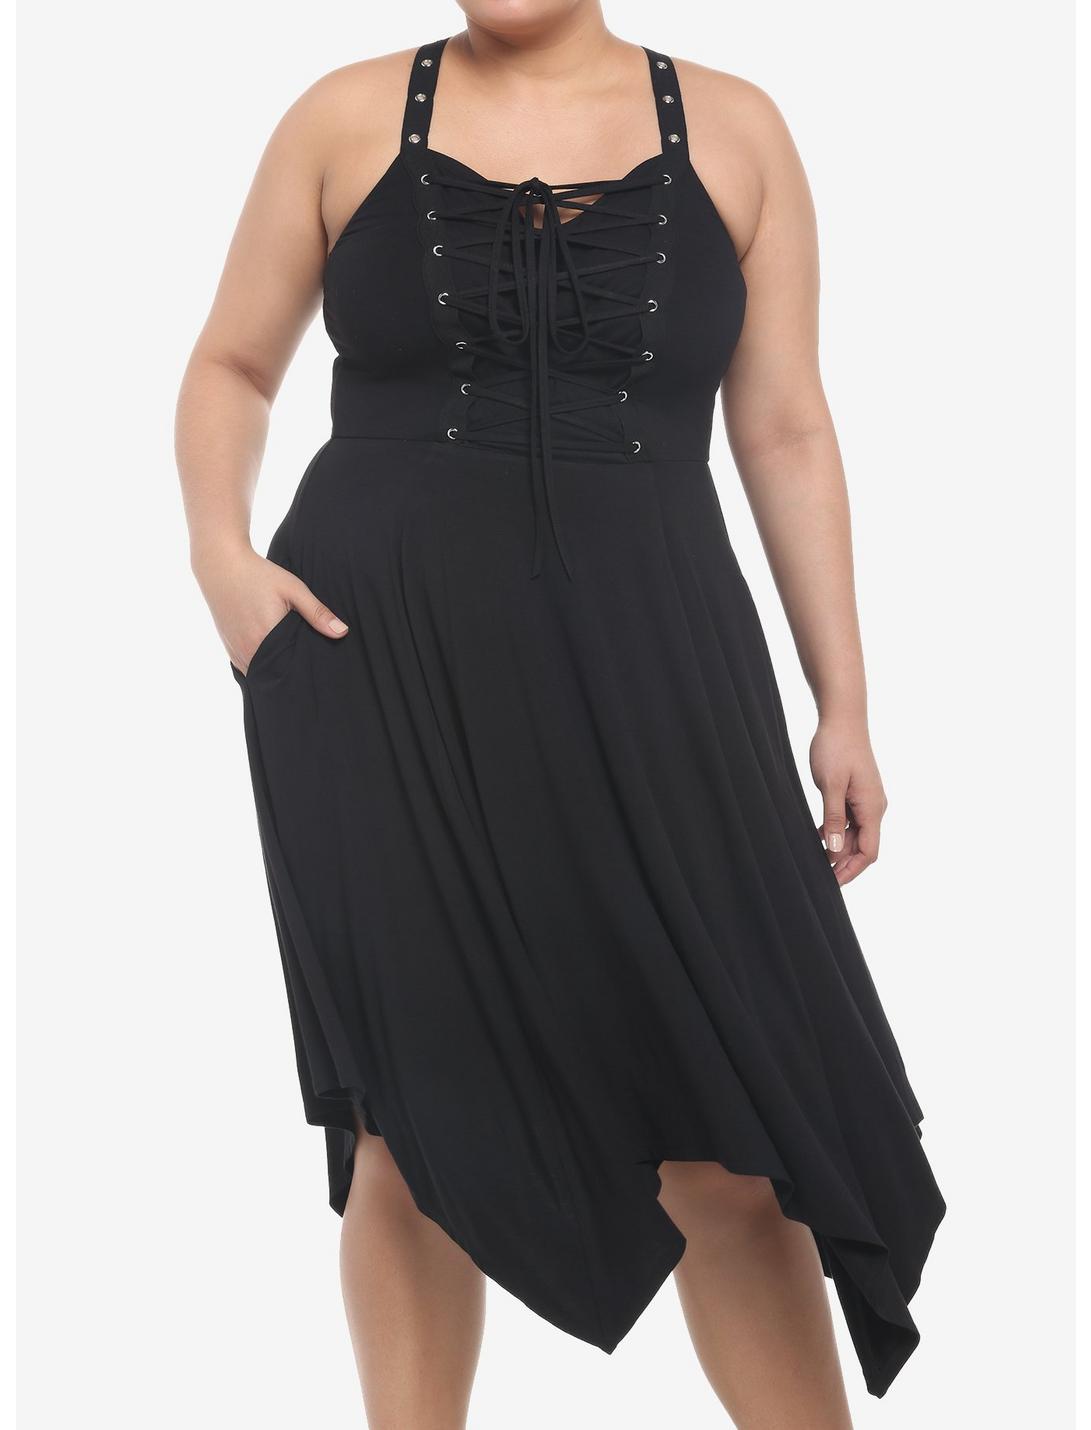 Grommet Lace-Up Hanky Hem Midi Dress Plus Size, BLACK, hi-res